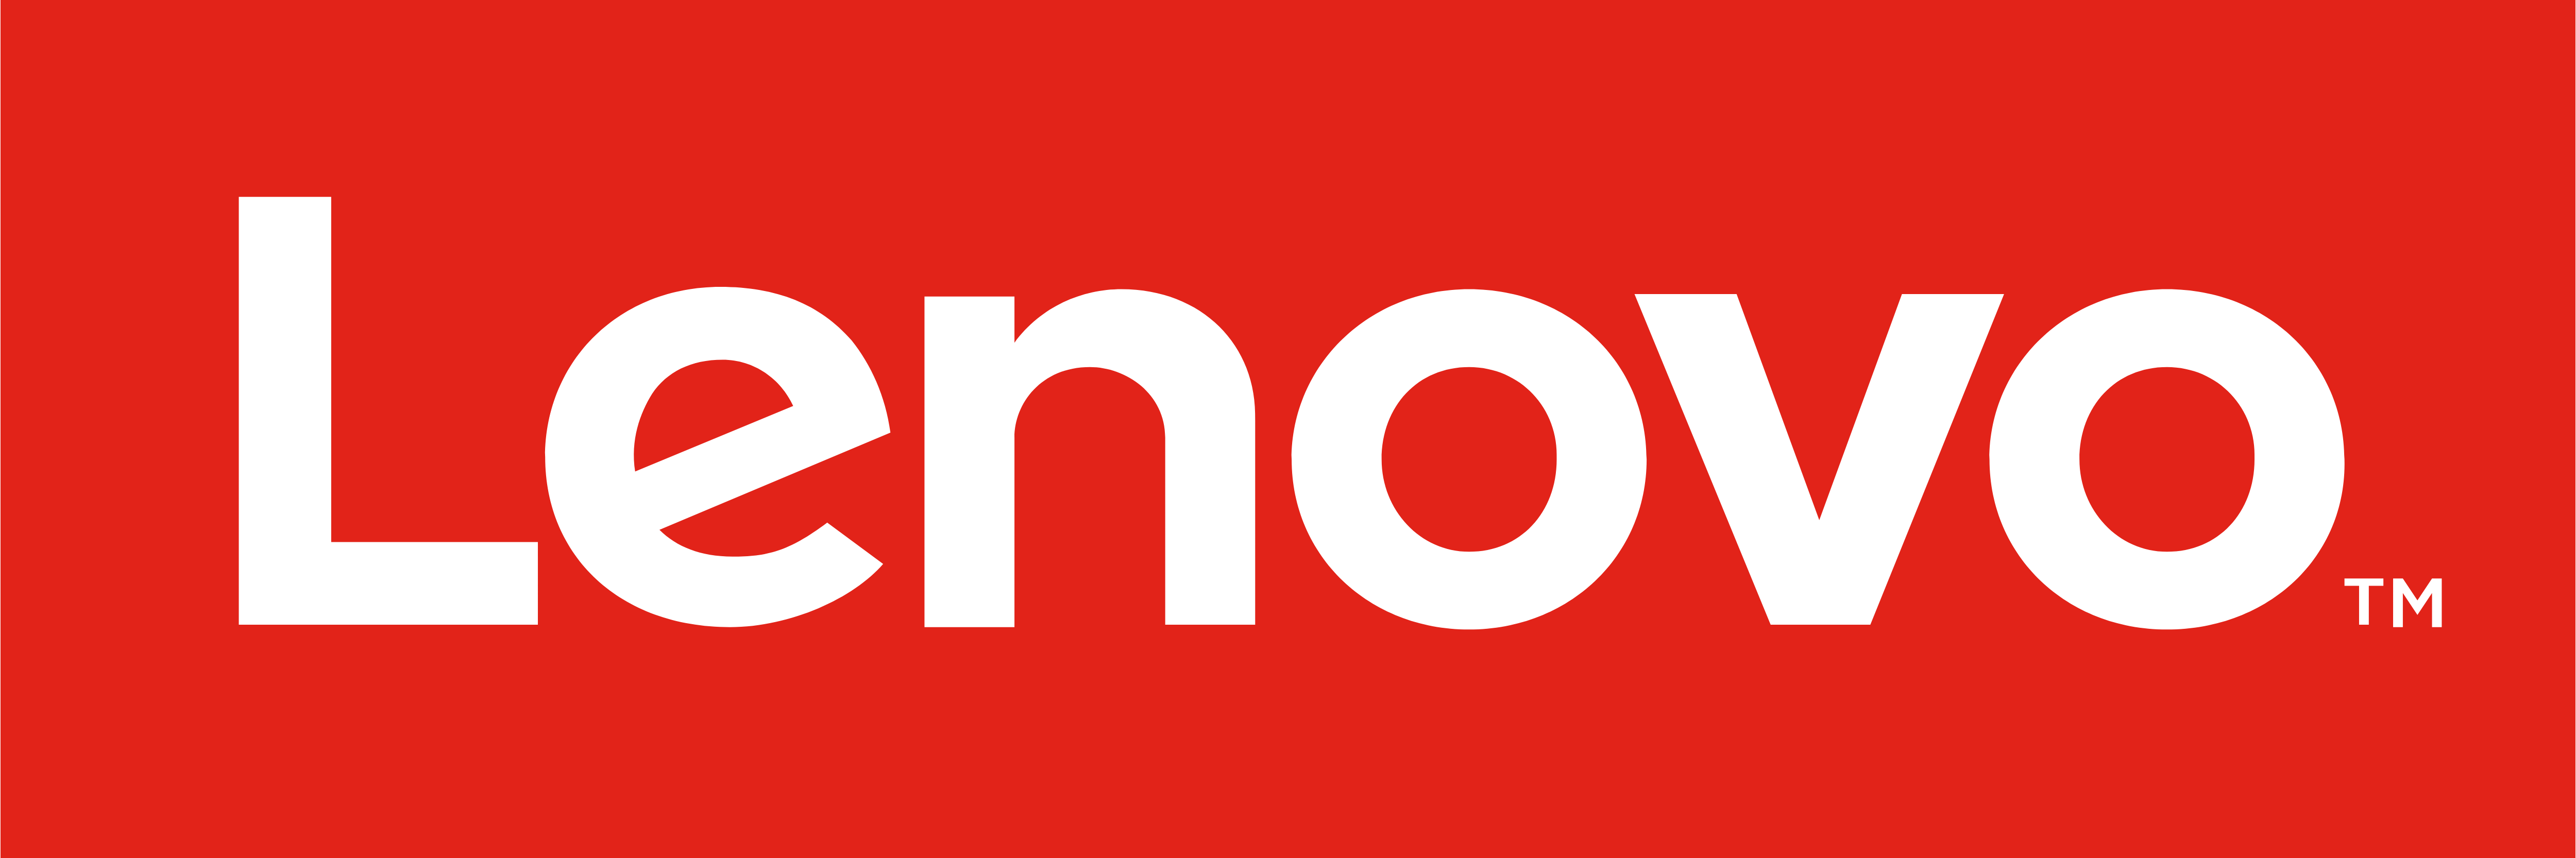 Lenovo Vendor Showcase